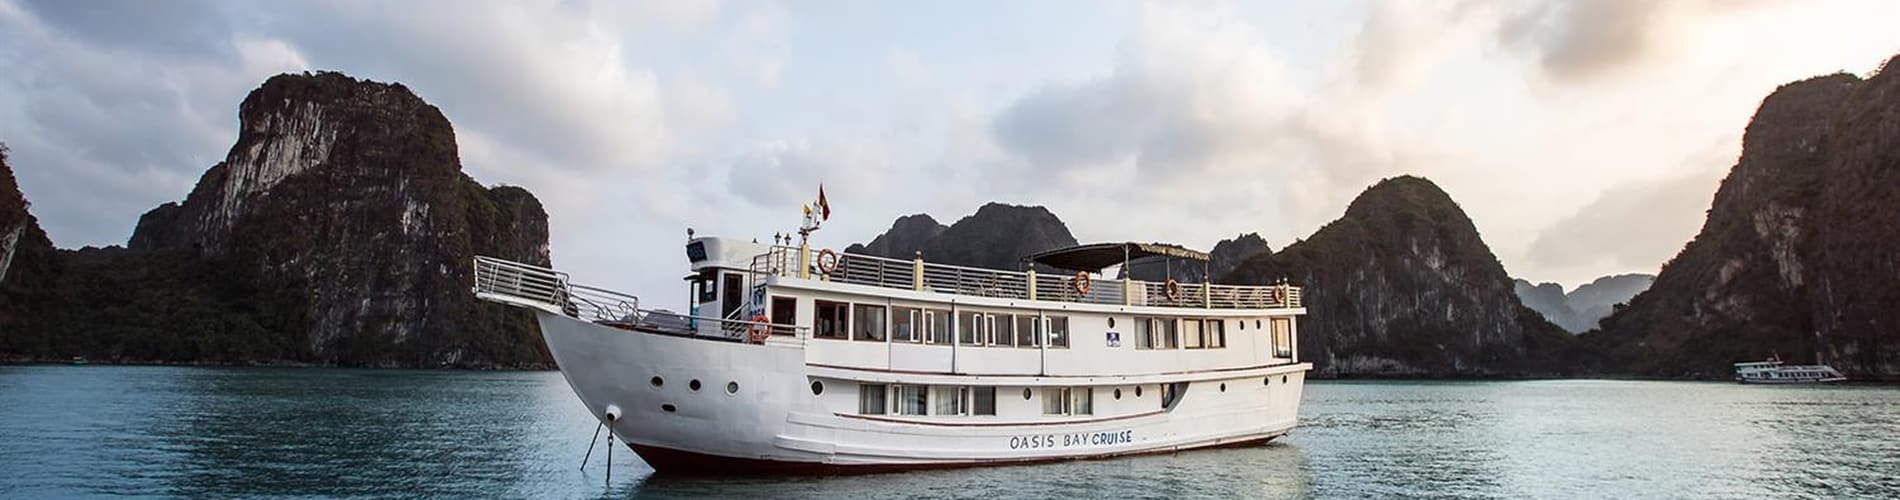 Oasis Bay Classic Cruise